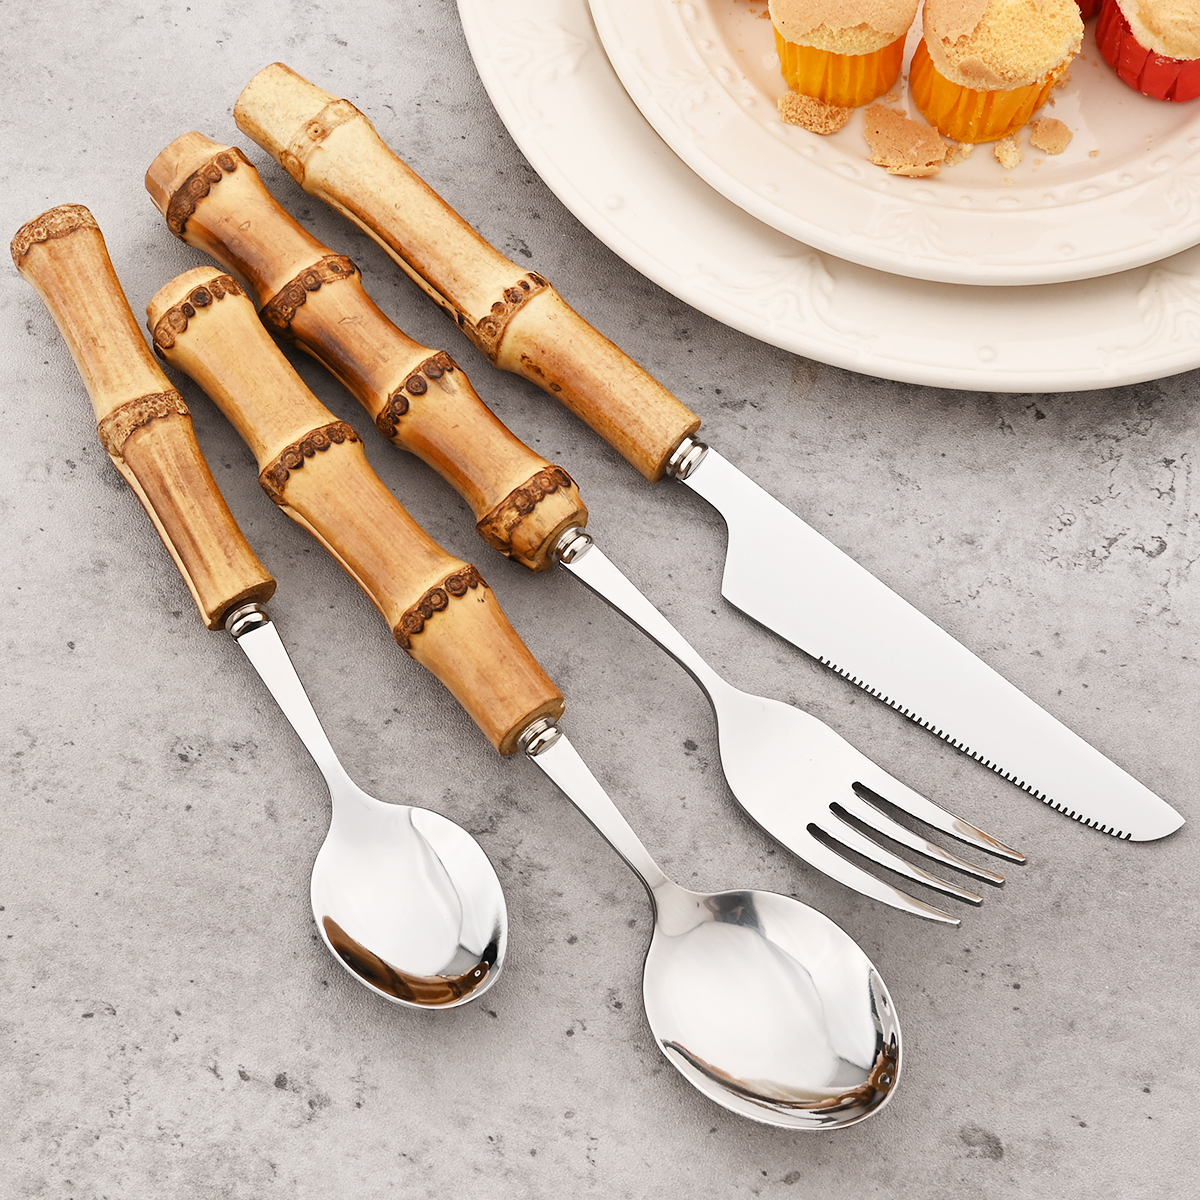 

24pcs Creative Bamboo Handle Cutlery Set Stainless Steel Tableware Steak Knife Fork Spoon Teaspoon Flatware Kitchen Tableware, Silver